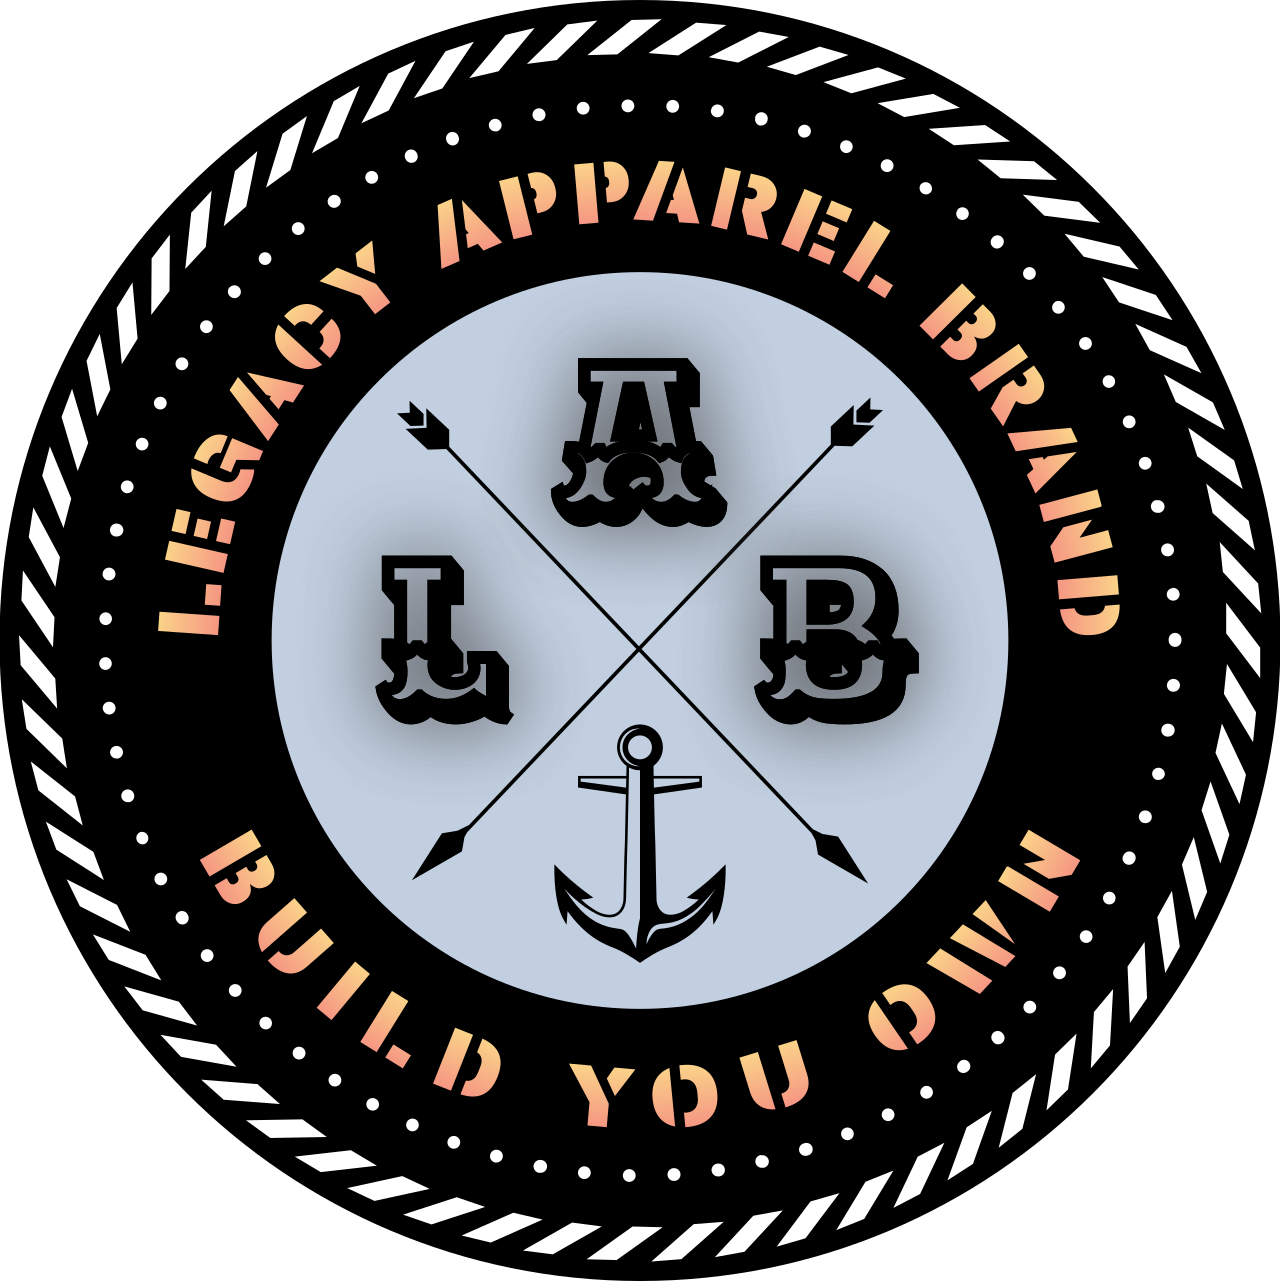 LEGACY APPAREL BRAND's logo